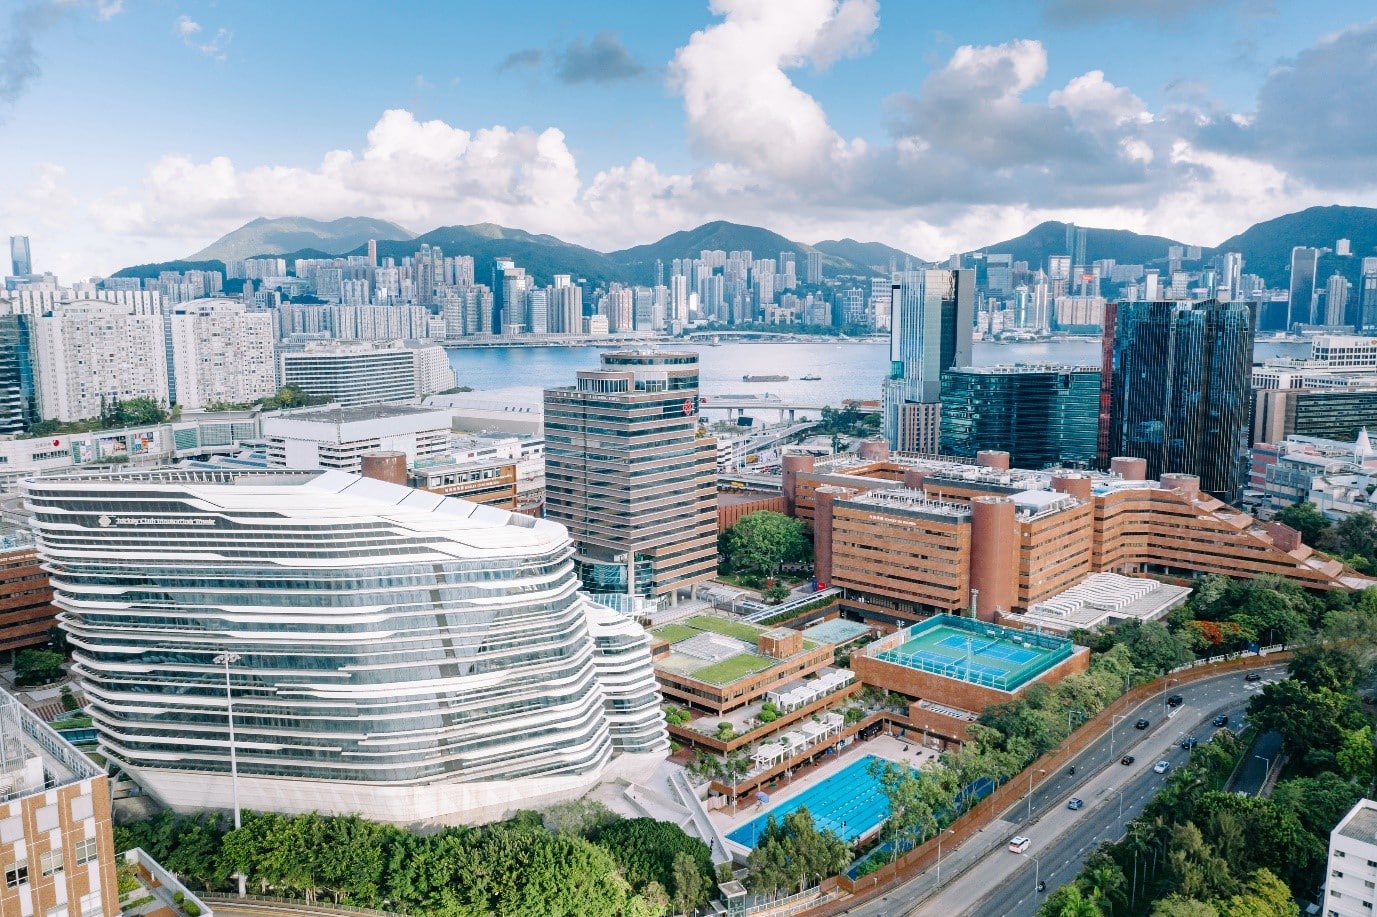 Global opportunities await at The Hong Kong Polytechnic University